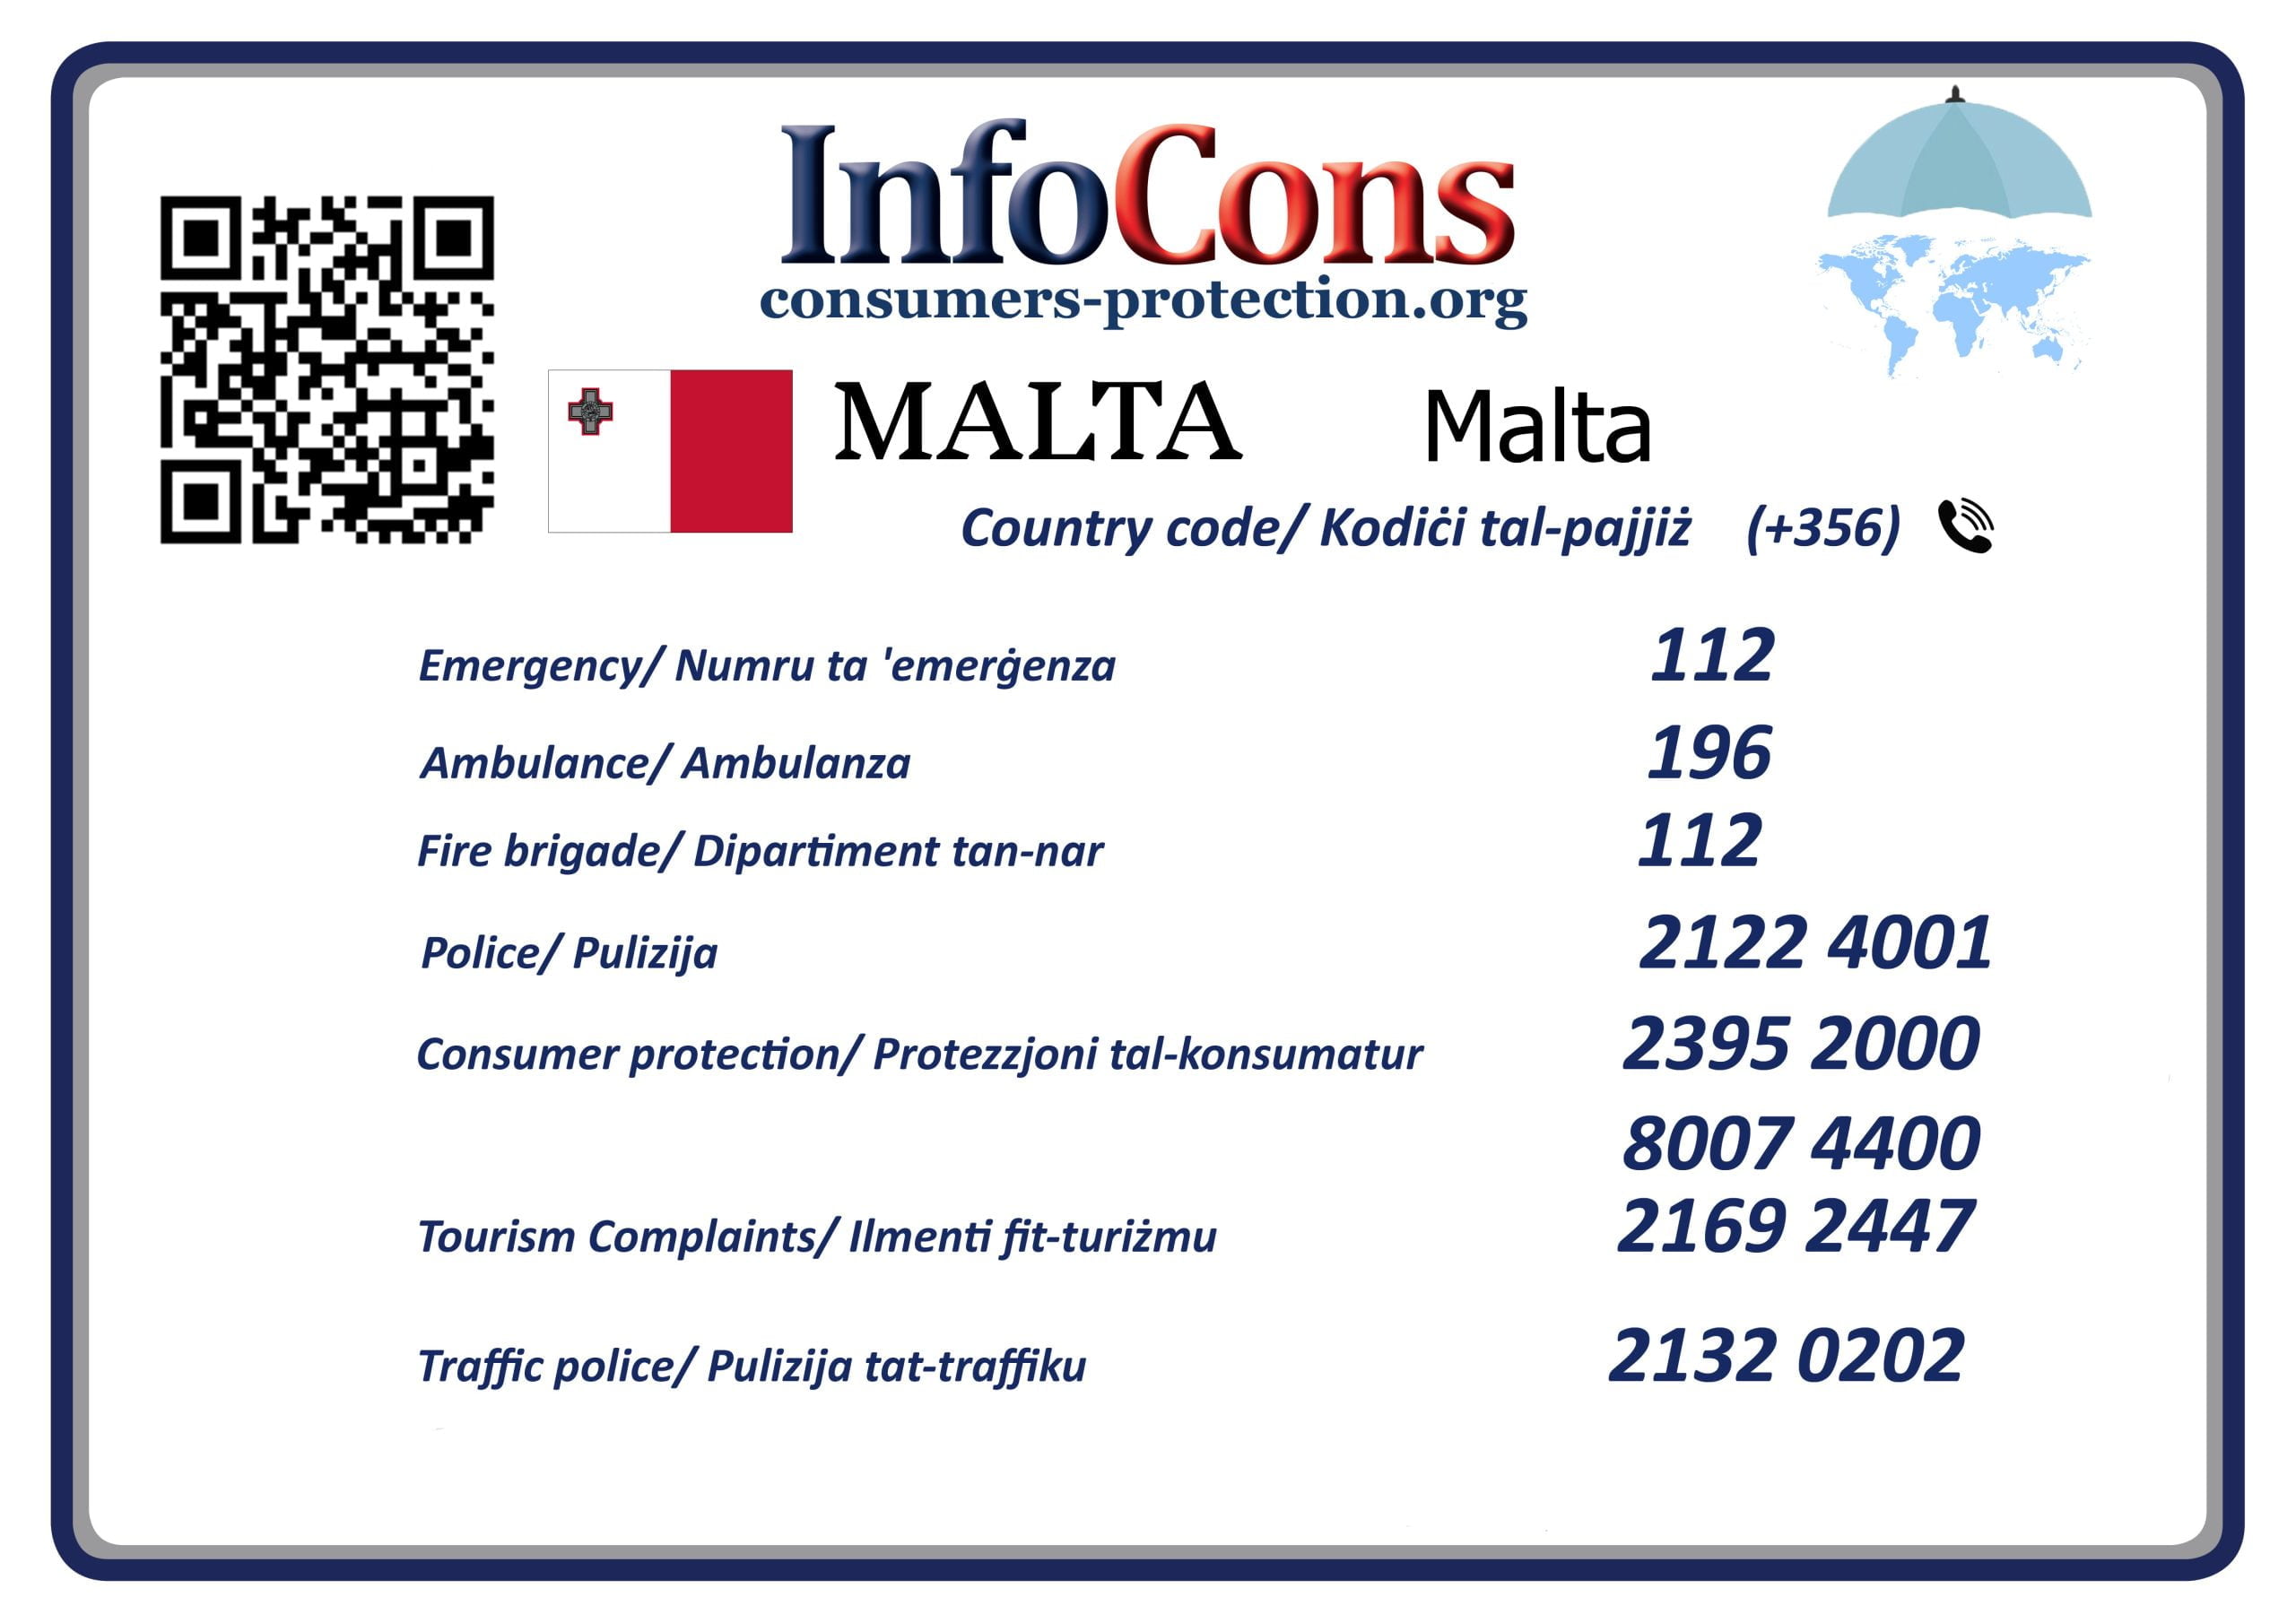 Protezzjoni tal-Konsumaturi Malta Consumers Protection Malta